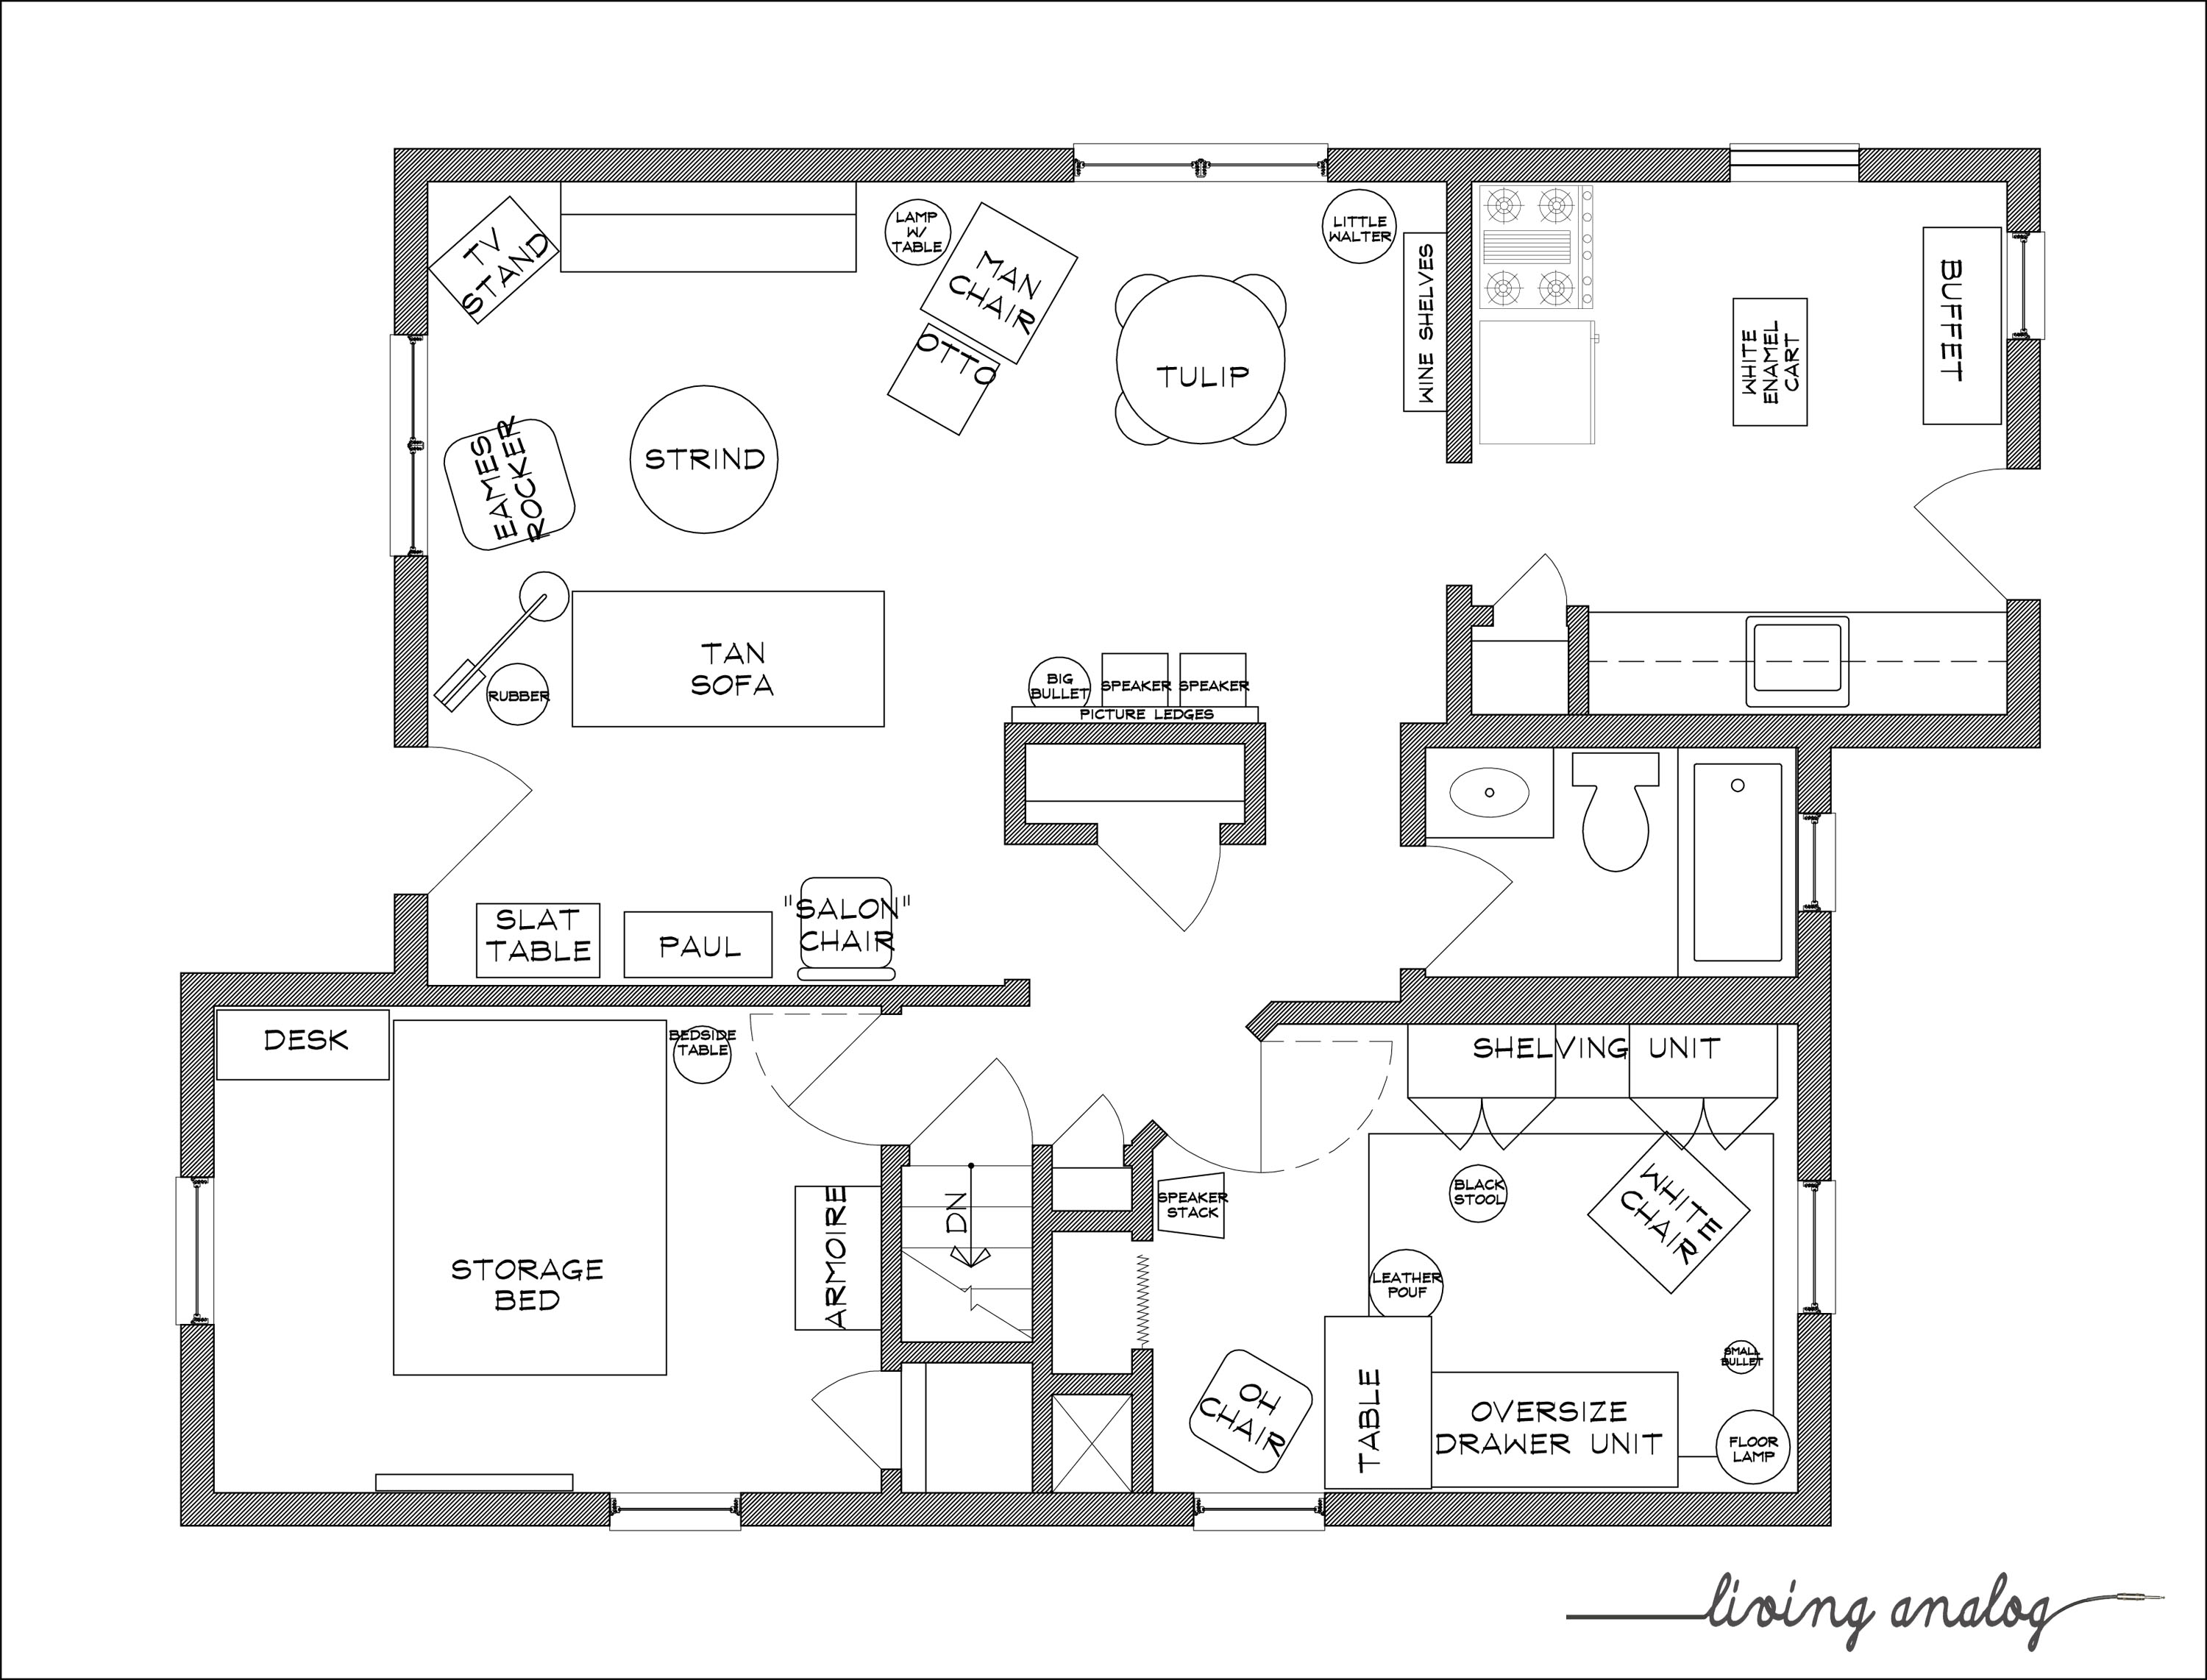 Coffee Shop Floor Plan Layout Interior Design Ideas